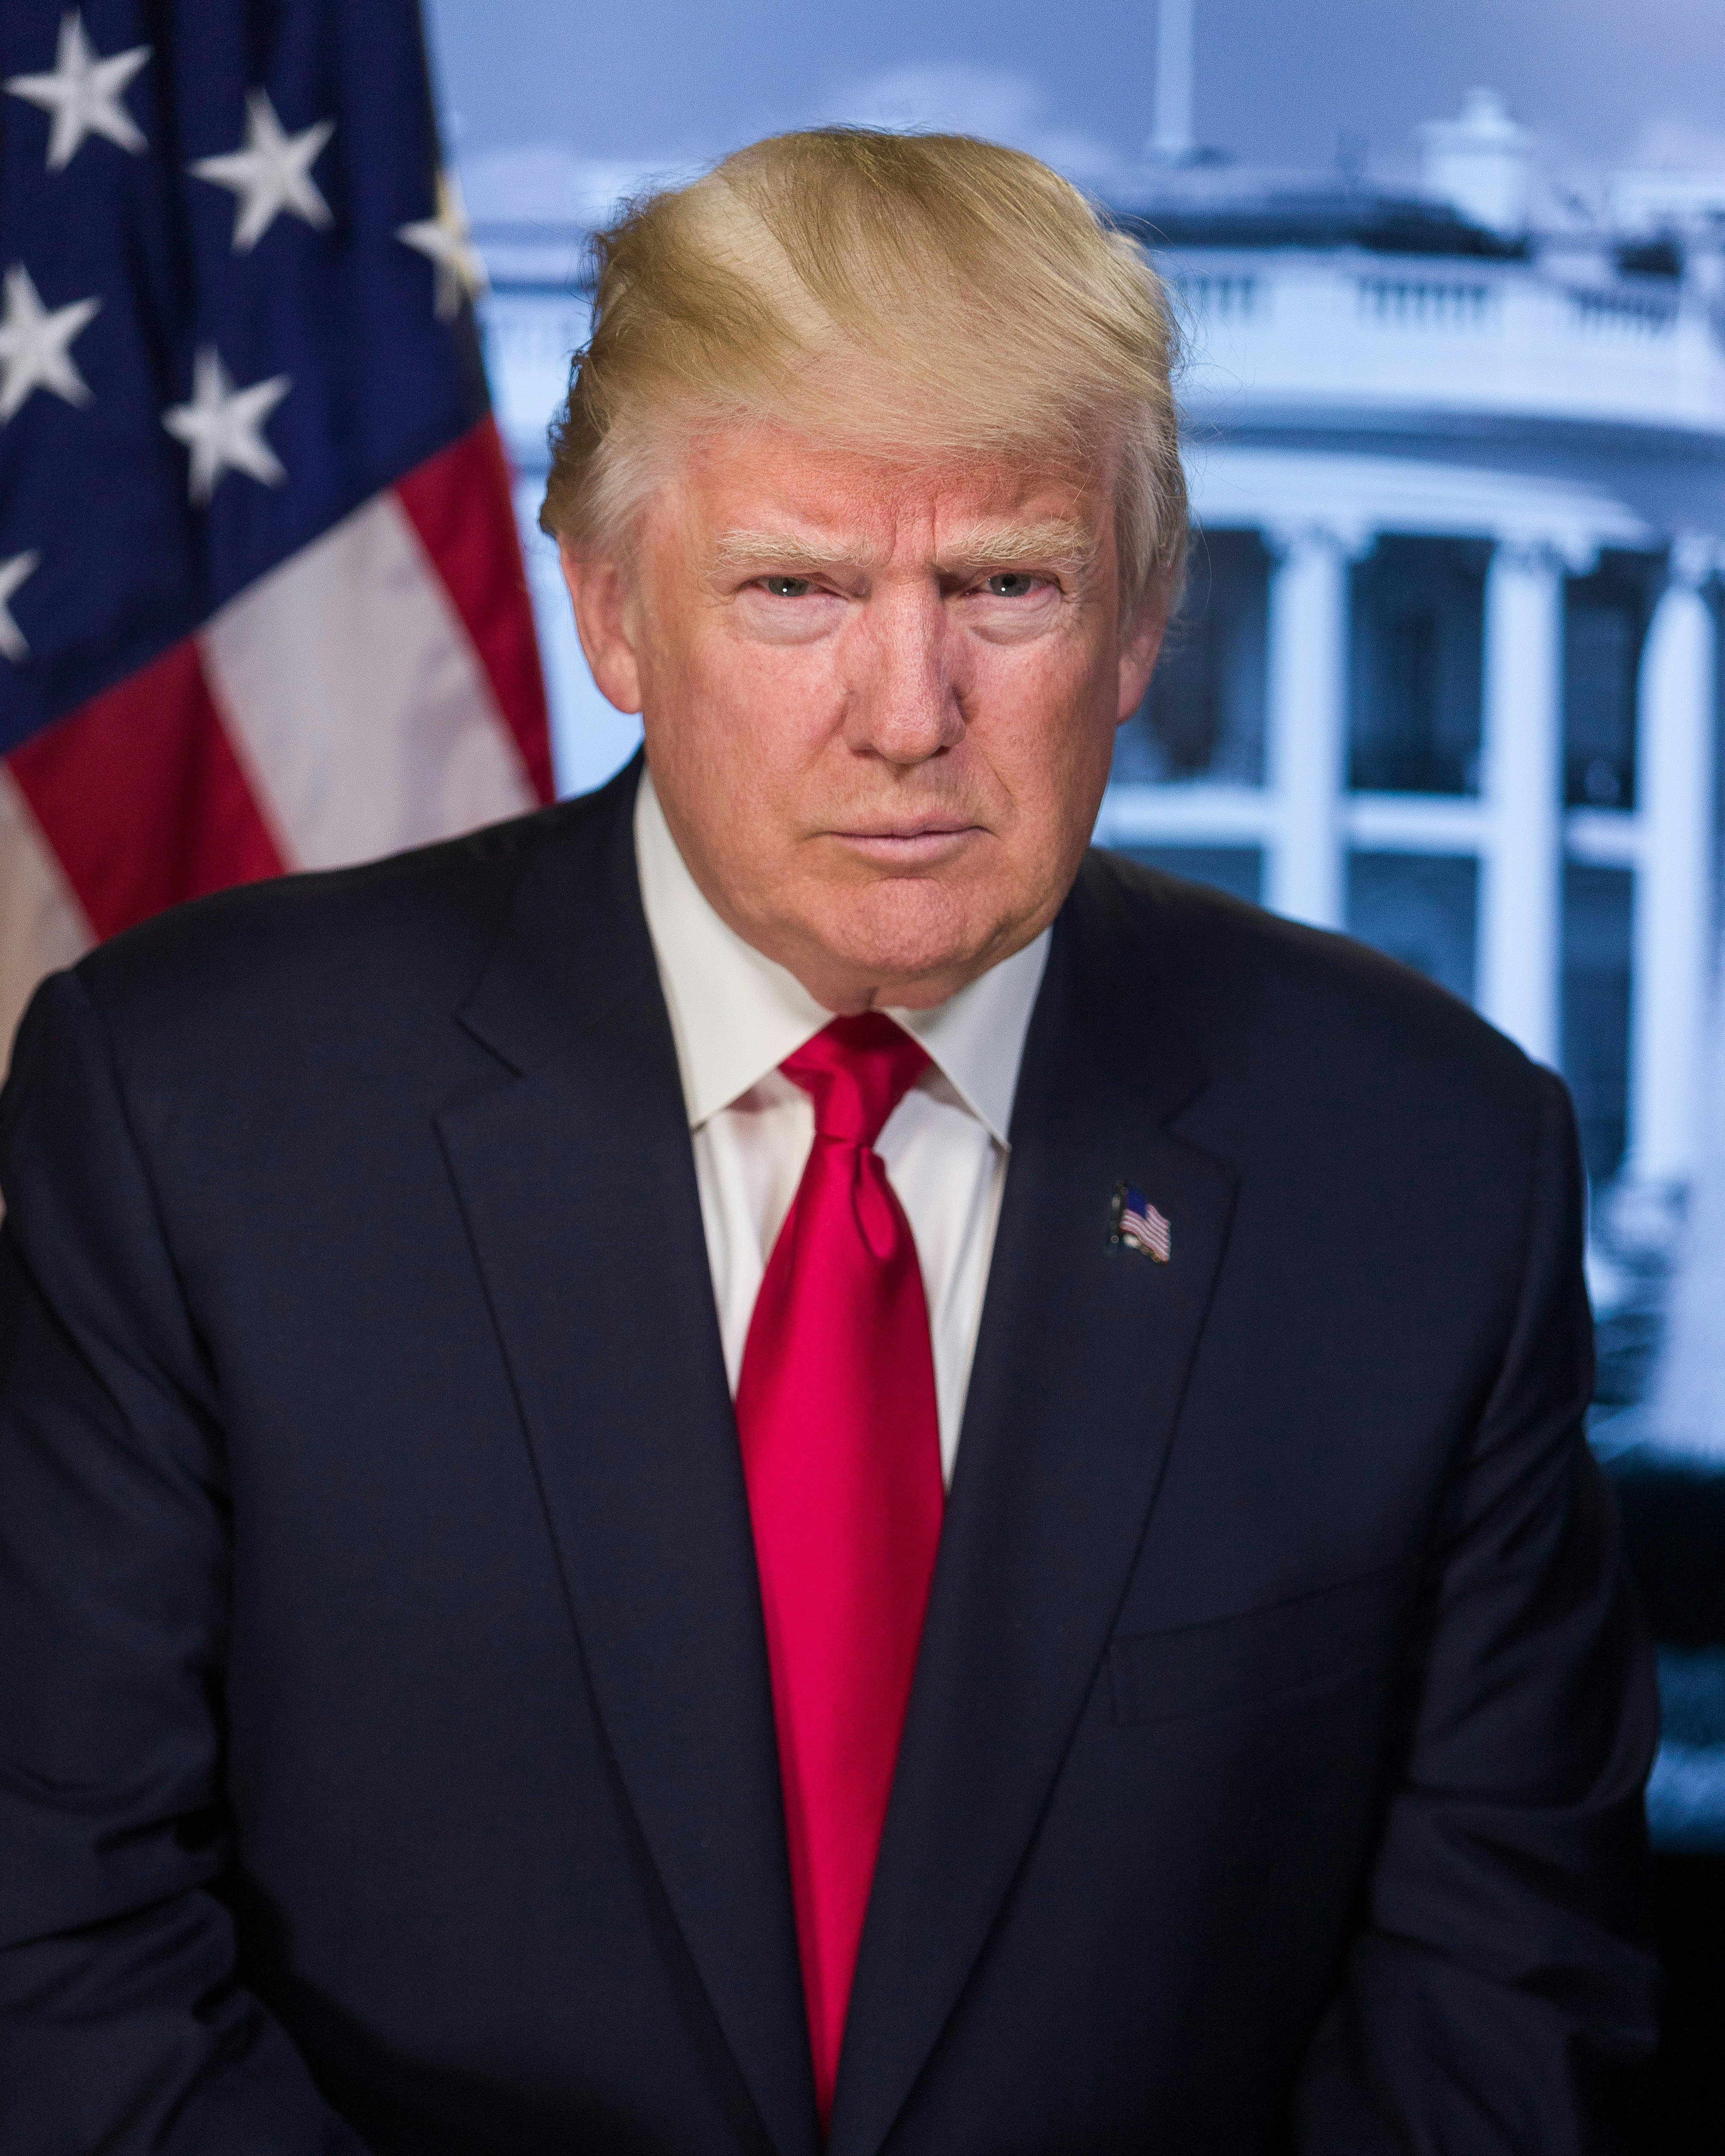 [Portrait of President-elect Donald Trump]. Digital photograph, 2016. Library of Congress Prints & Photographs Division.

https://www.loc.gov/item/2017645723/